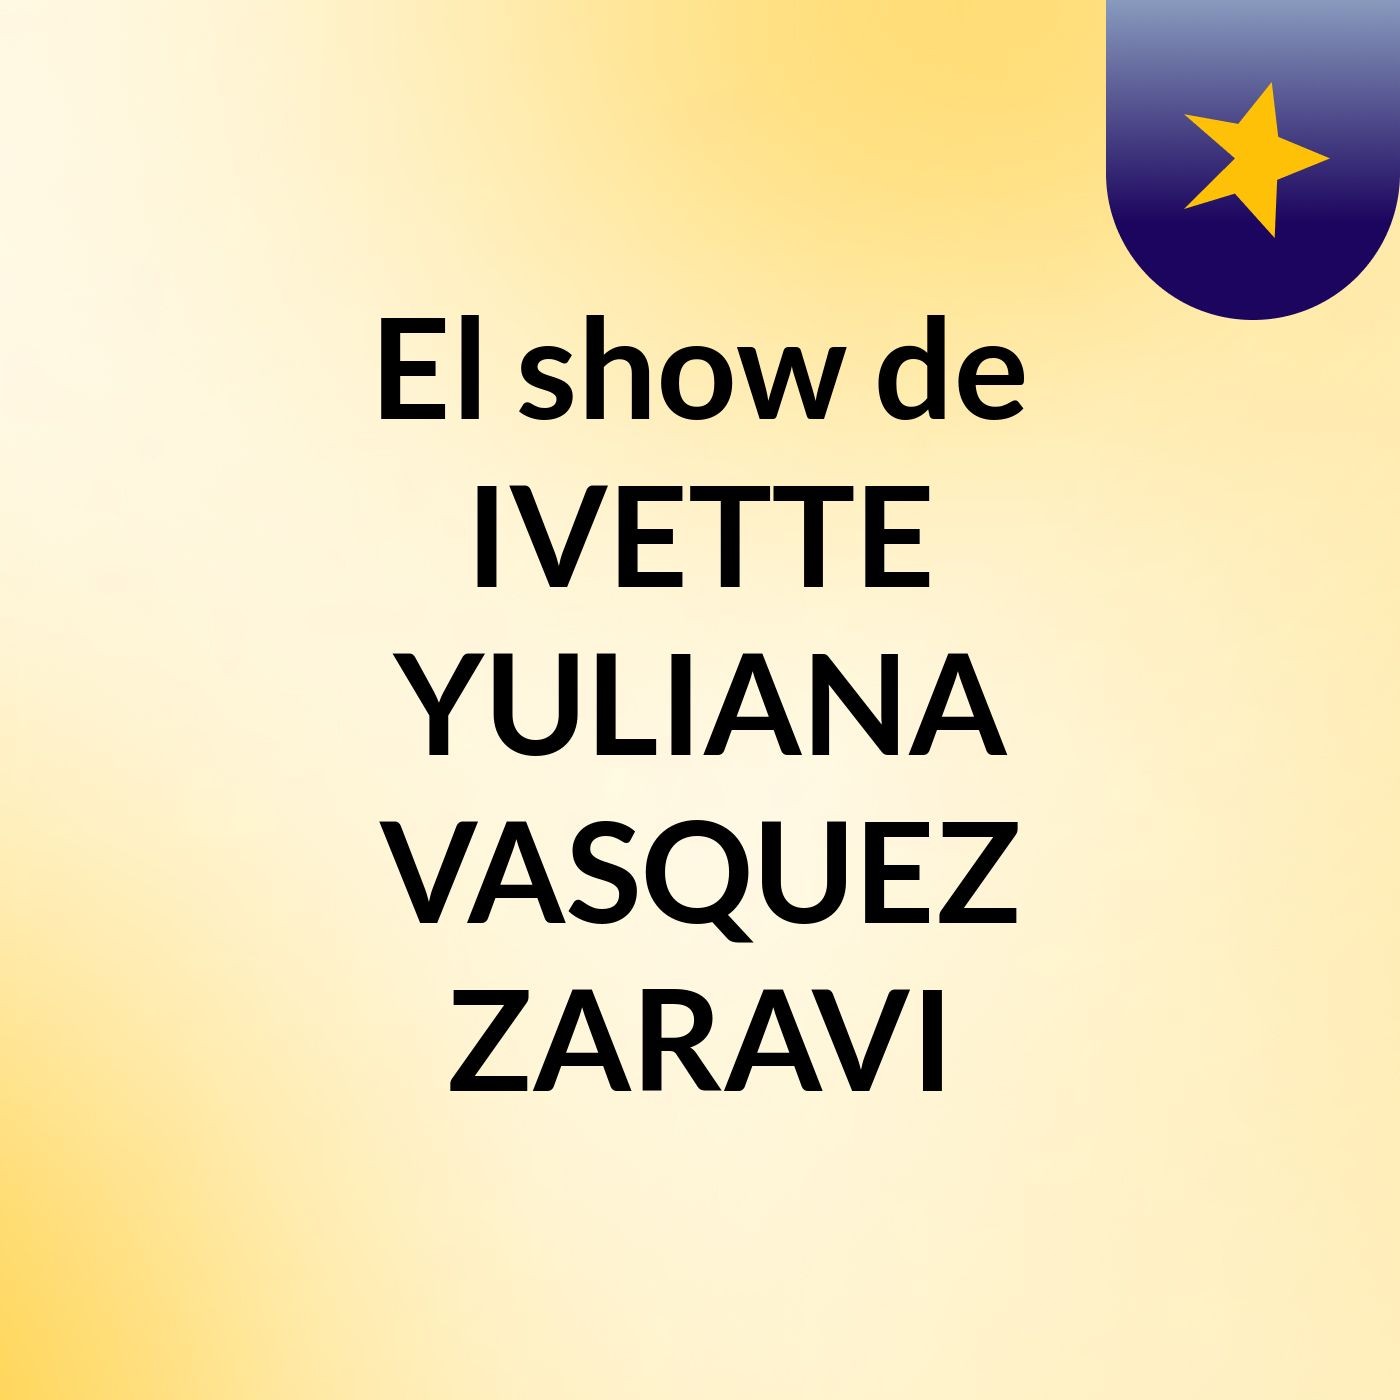 El show de IVETTE YULIANA VASQUEZ ZARAVI